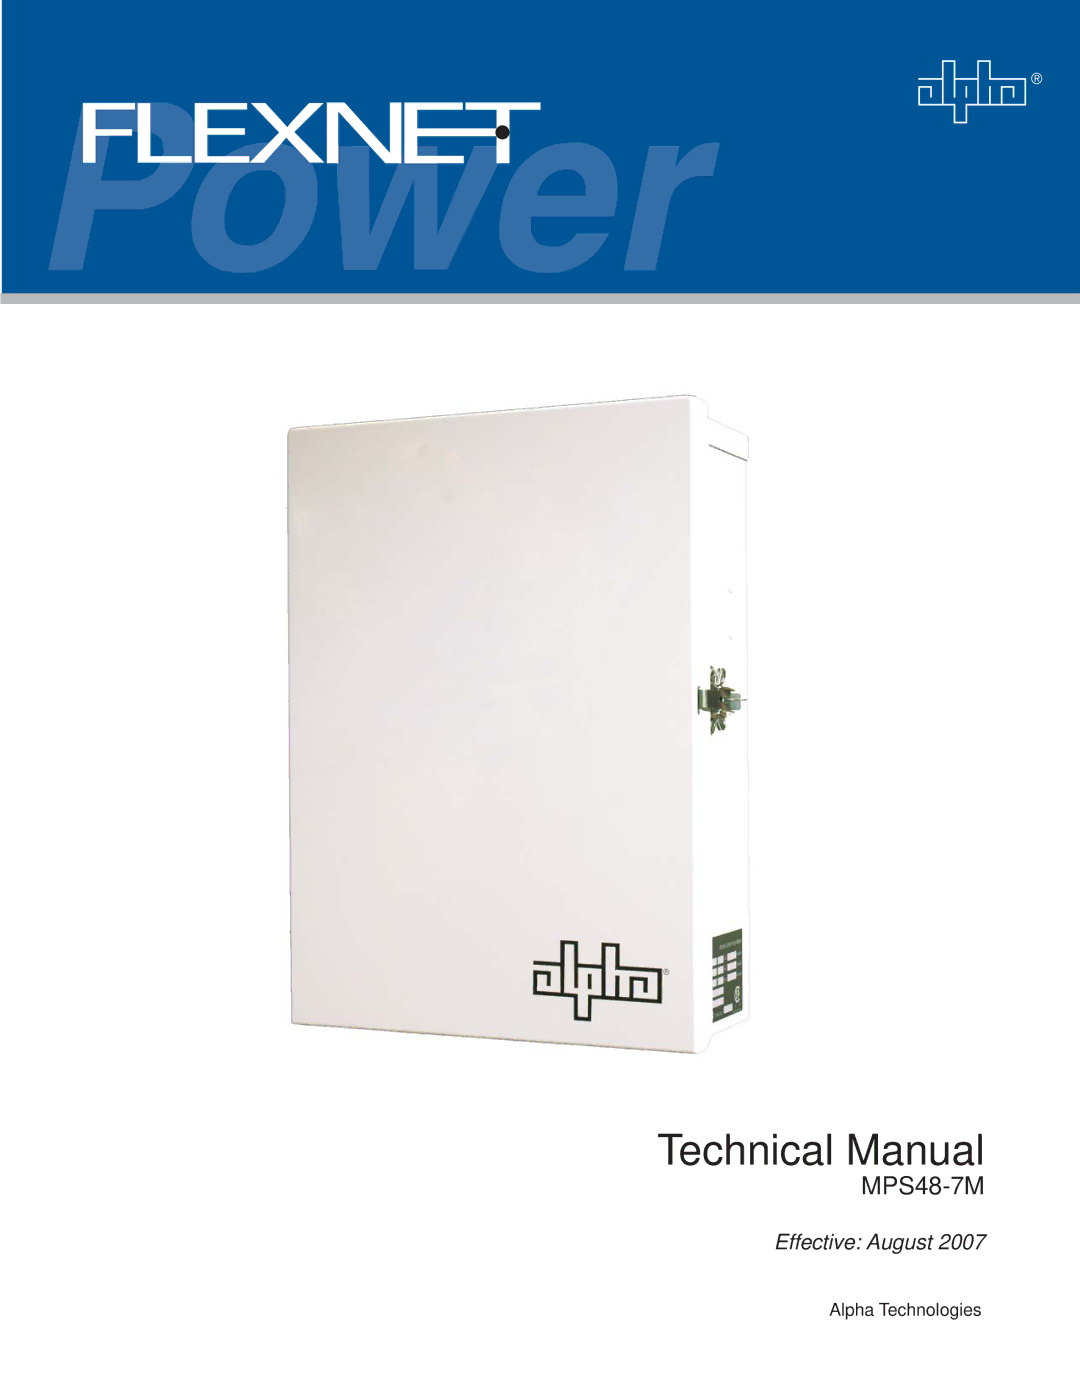 Alpha Vision Tech MPS48-7M technical manual Technical Manual 